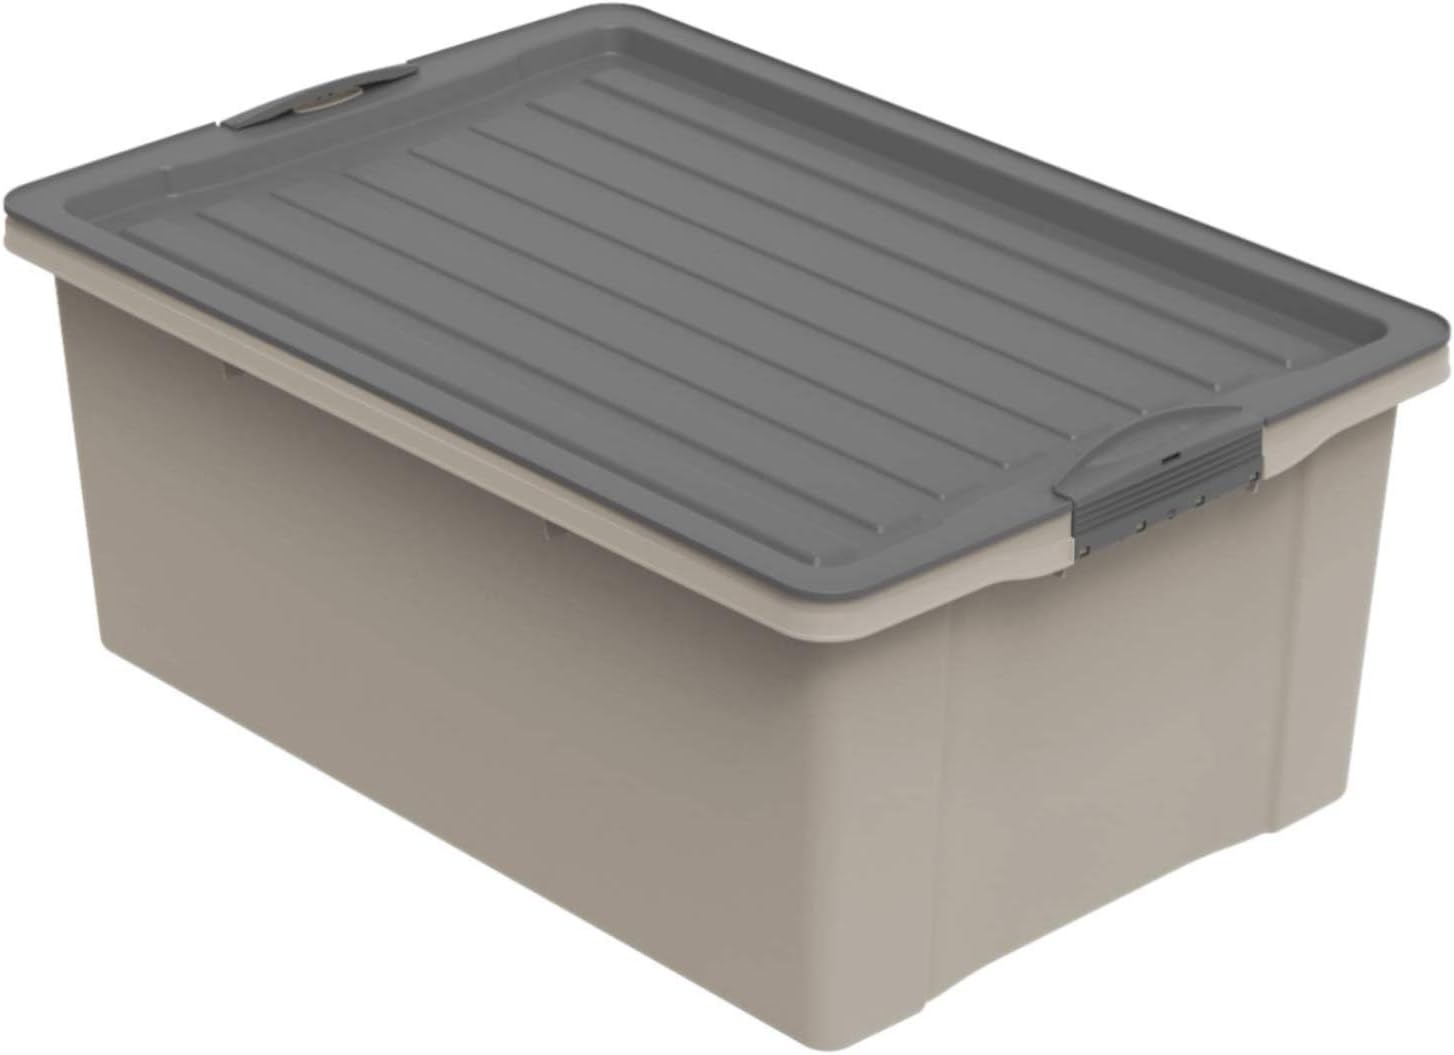 Rotho Compact Aufbewahrungsbox mit Deckel, Kunststoff (PP recycelt) BPA-frei, cappuccino/anthrazit, A3(57,0 x 40,0 x 25,0 cm), 38Liter